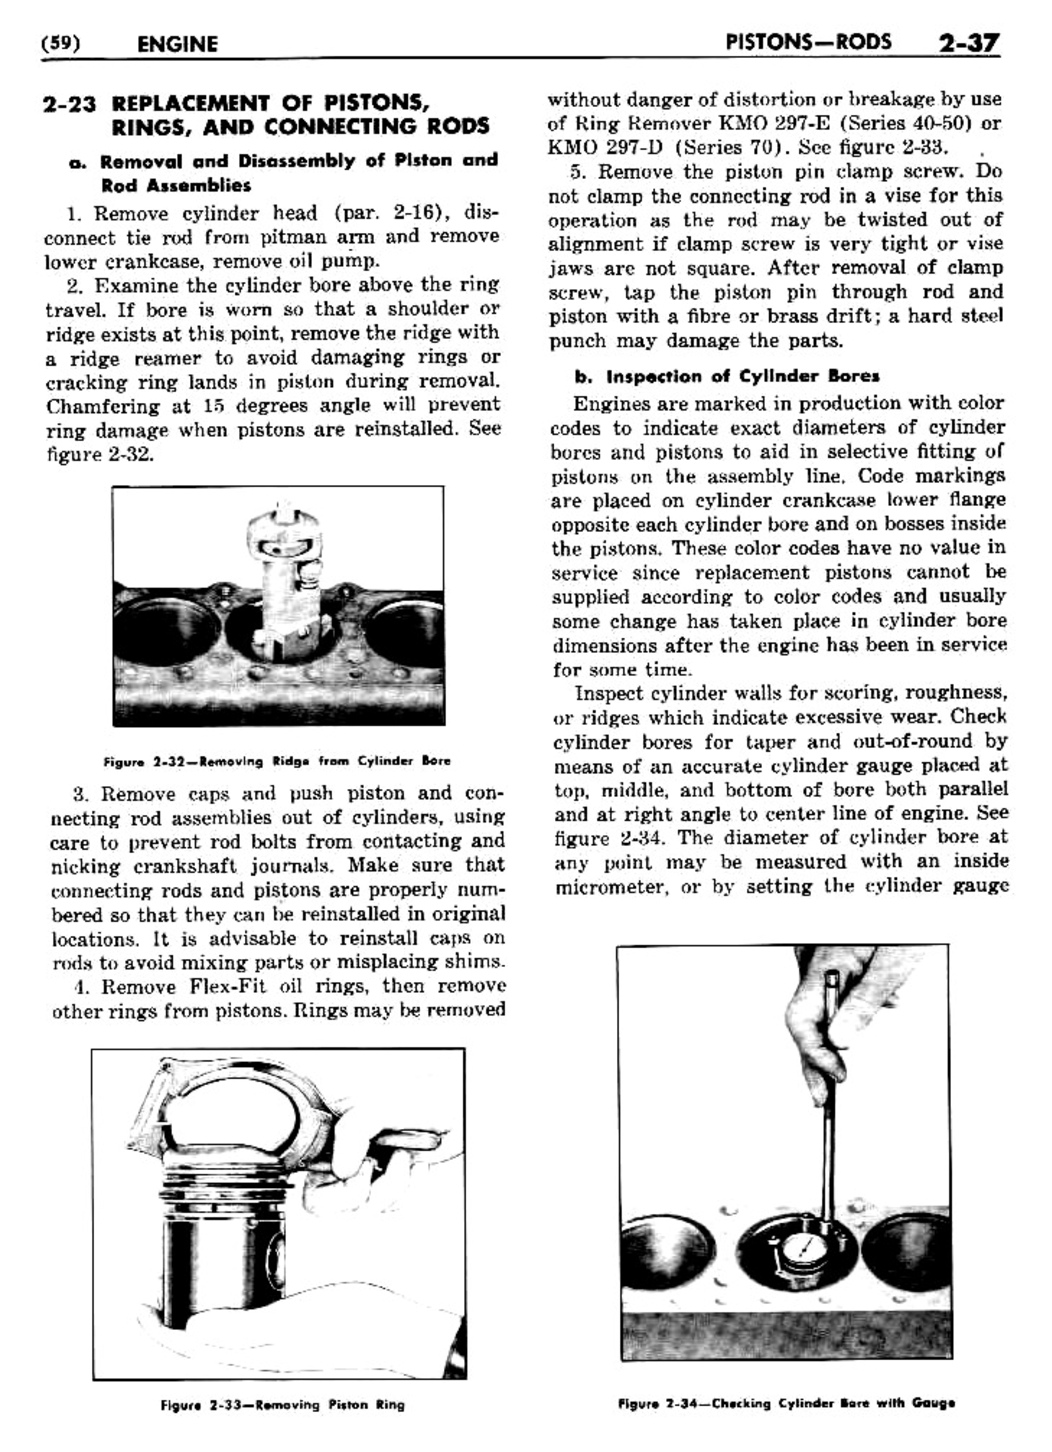 n_03 1948 Buick Shop Manual - Engine-037-037.jpg